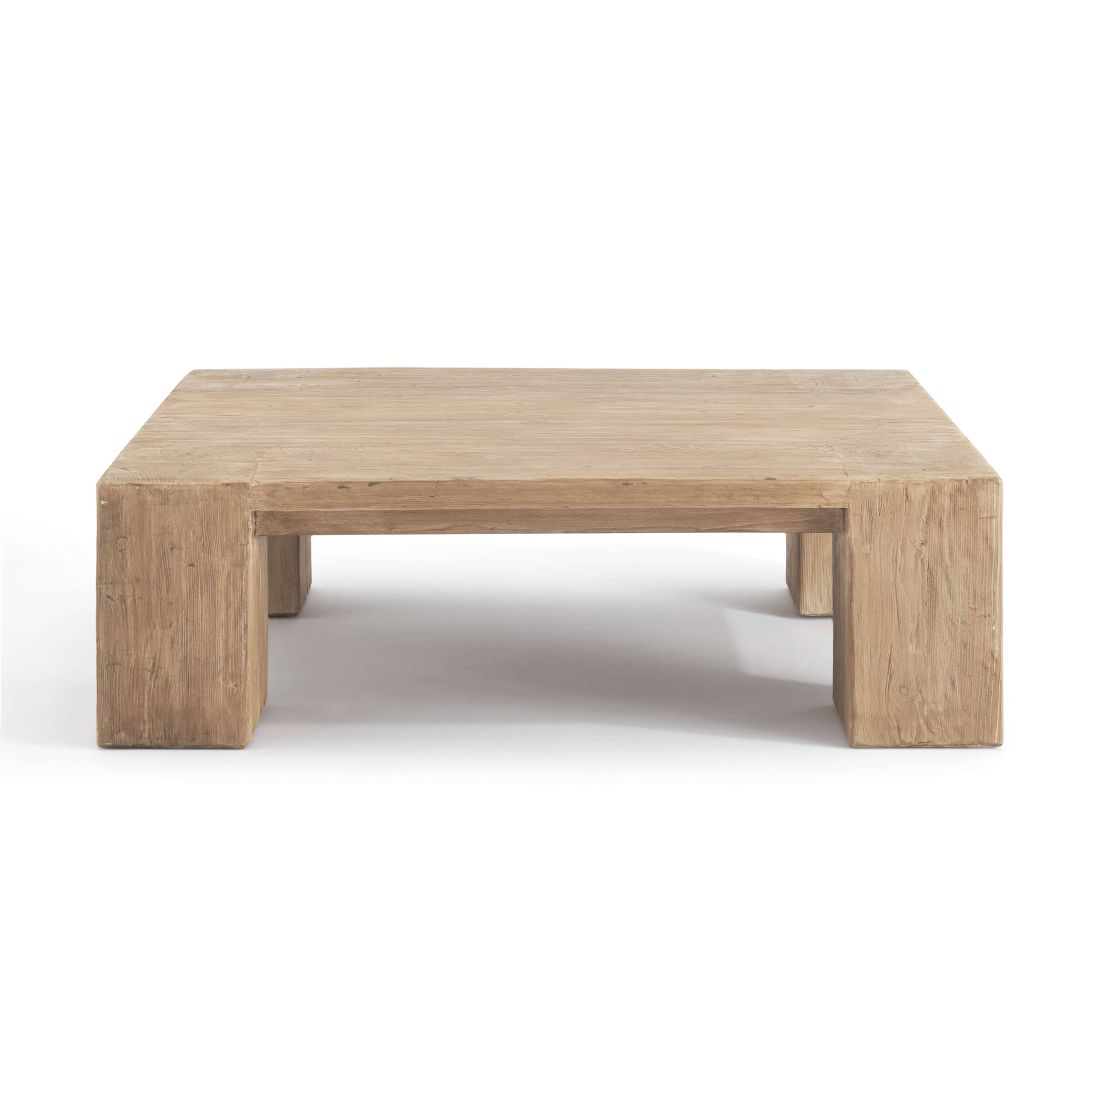 EM Wabisabi Rustic Rectangular Reclaimed Wood Coffee Table with Block Legs | Eternity Modern